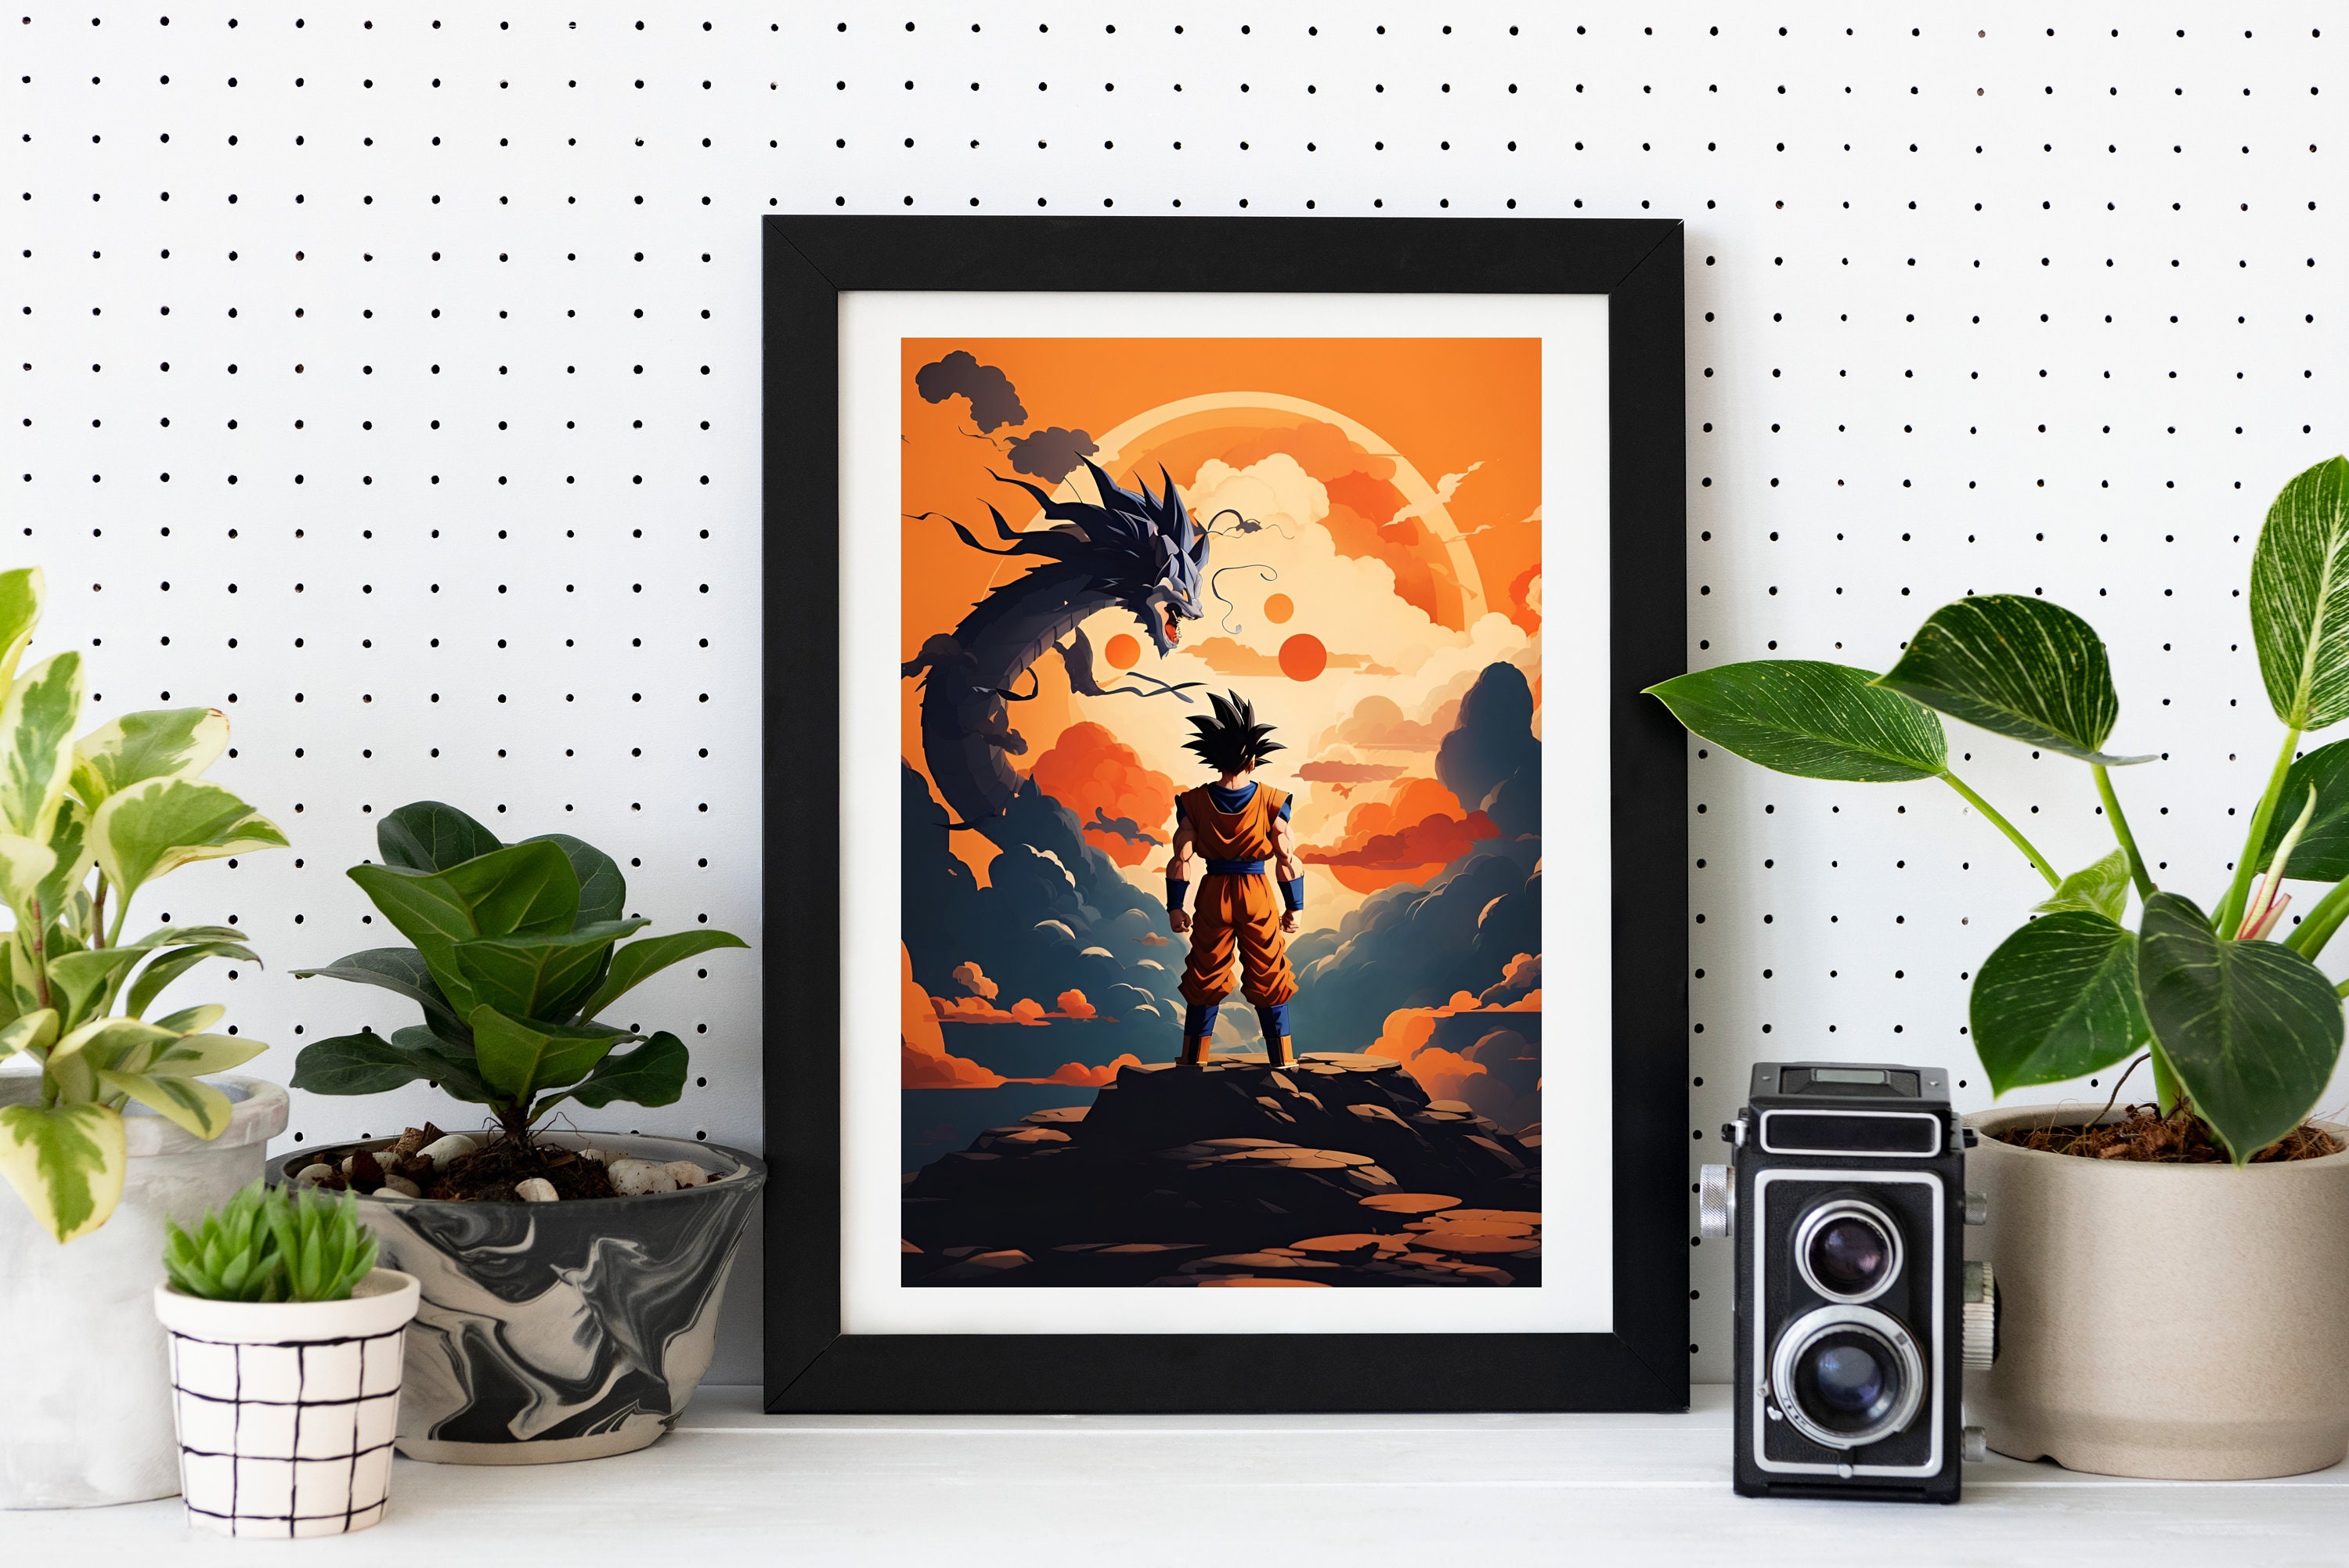 Dragon Ball Sun Goku anime personaje personaje cartel pegatinas decorativas  pared 48x104cm